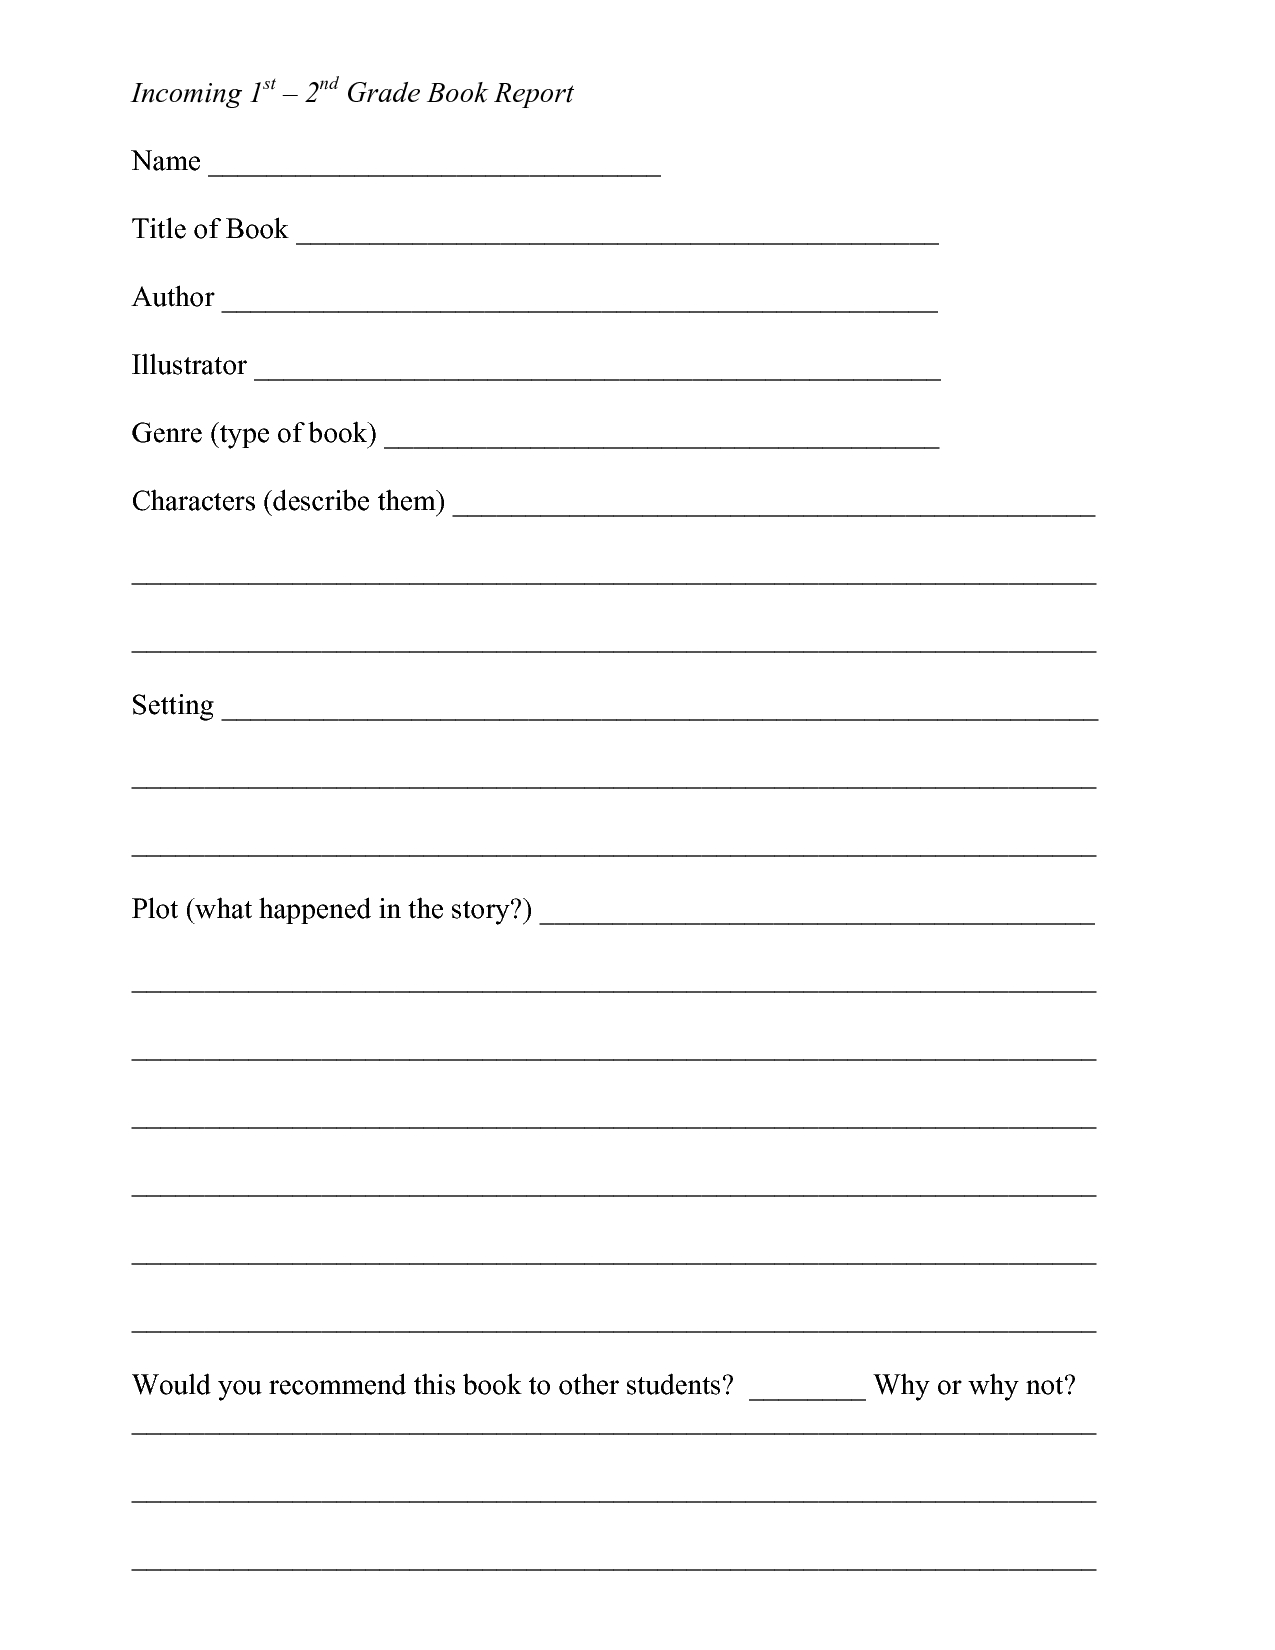 Book Report Template 2Nd Grade Free – Book Report Form With Regard To 2Nd Grade Book Report Template